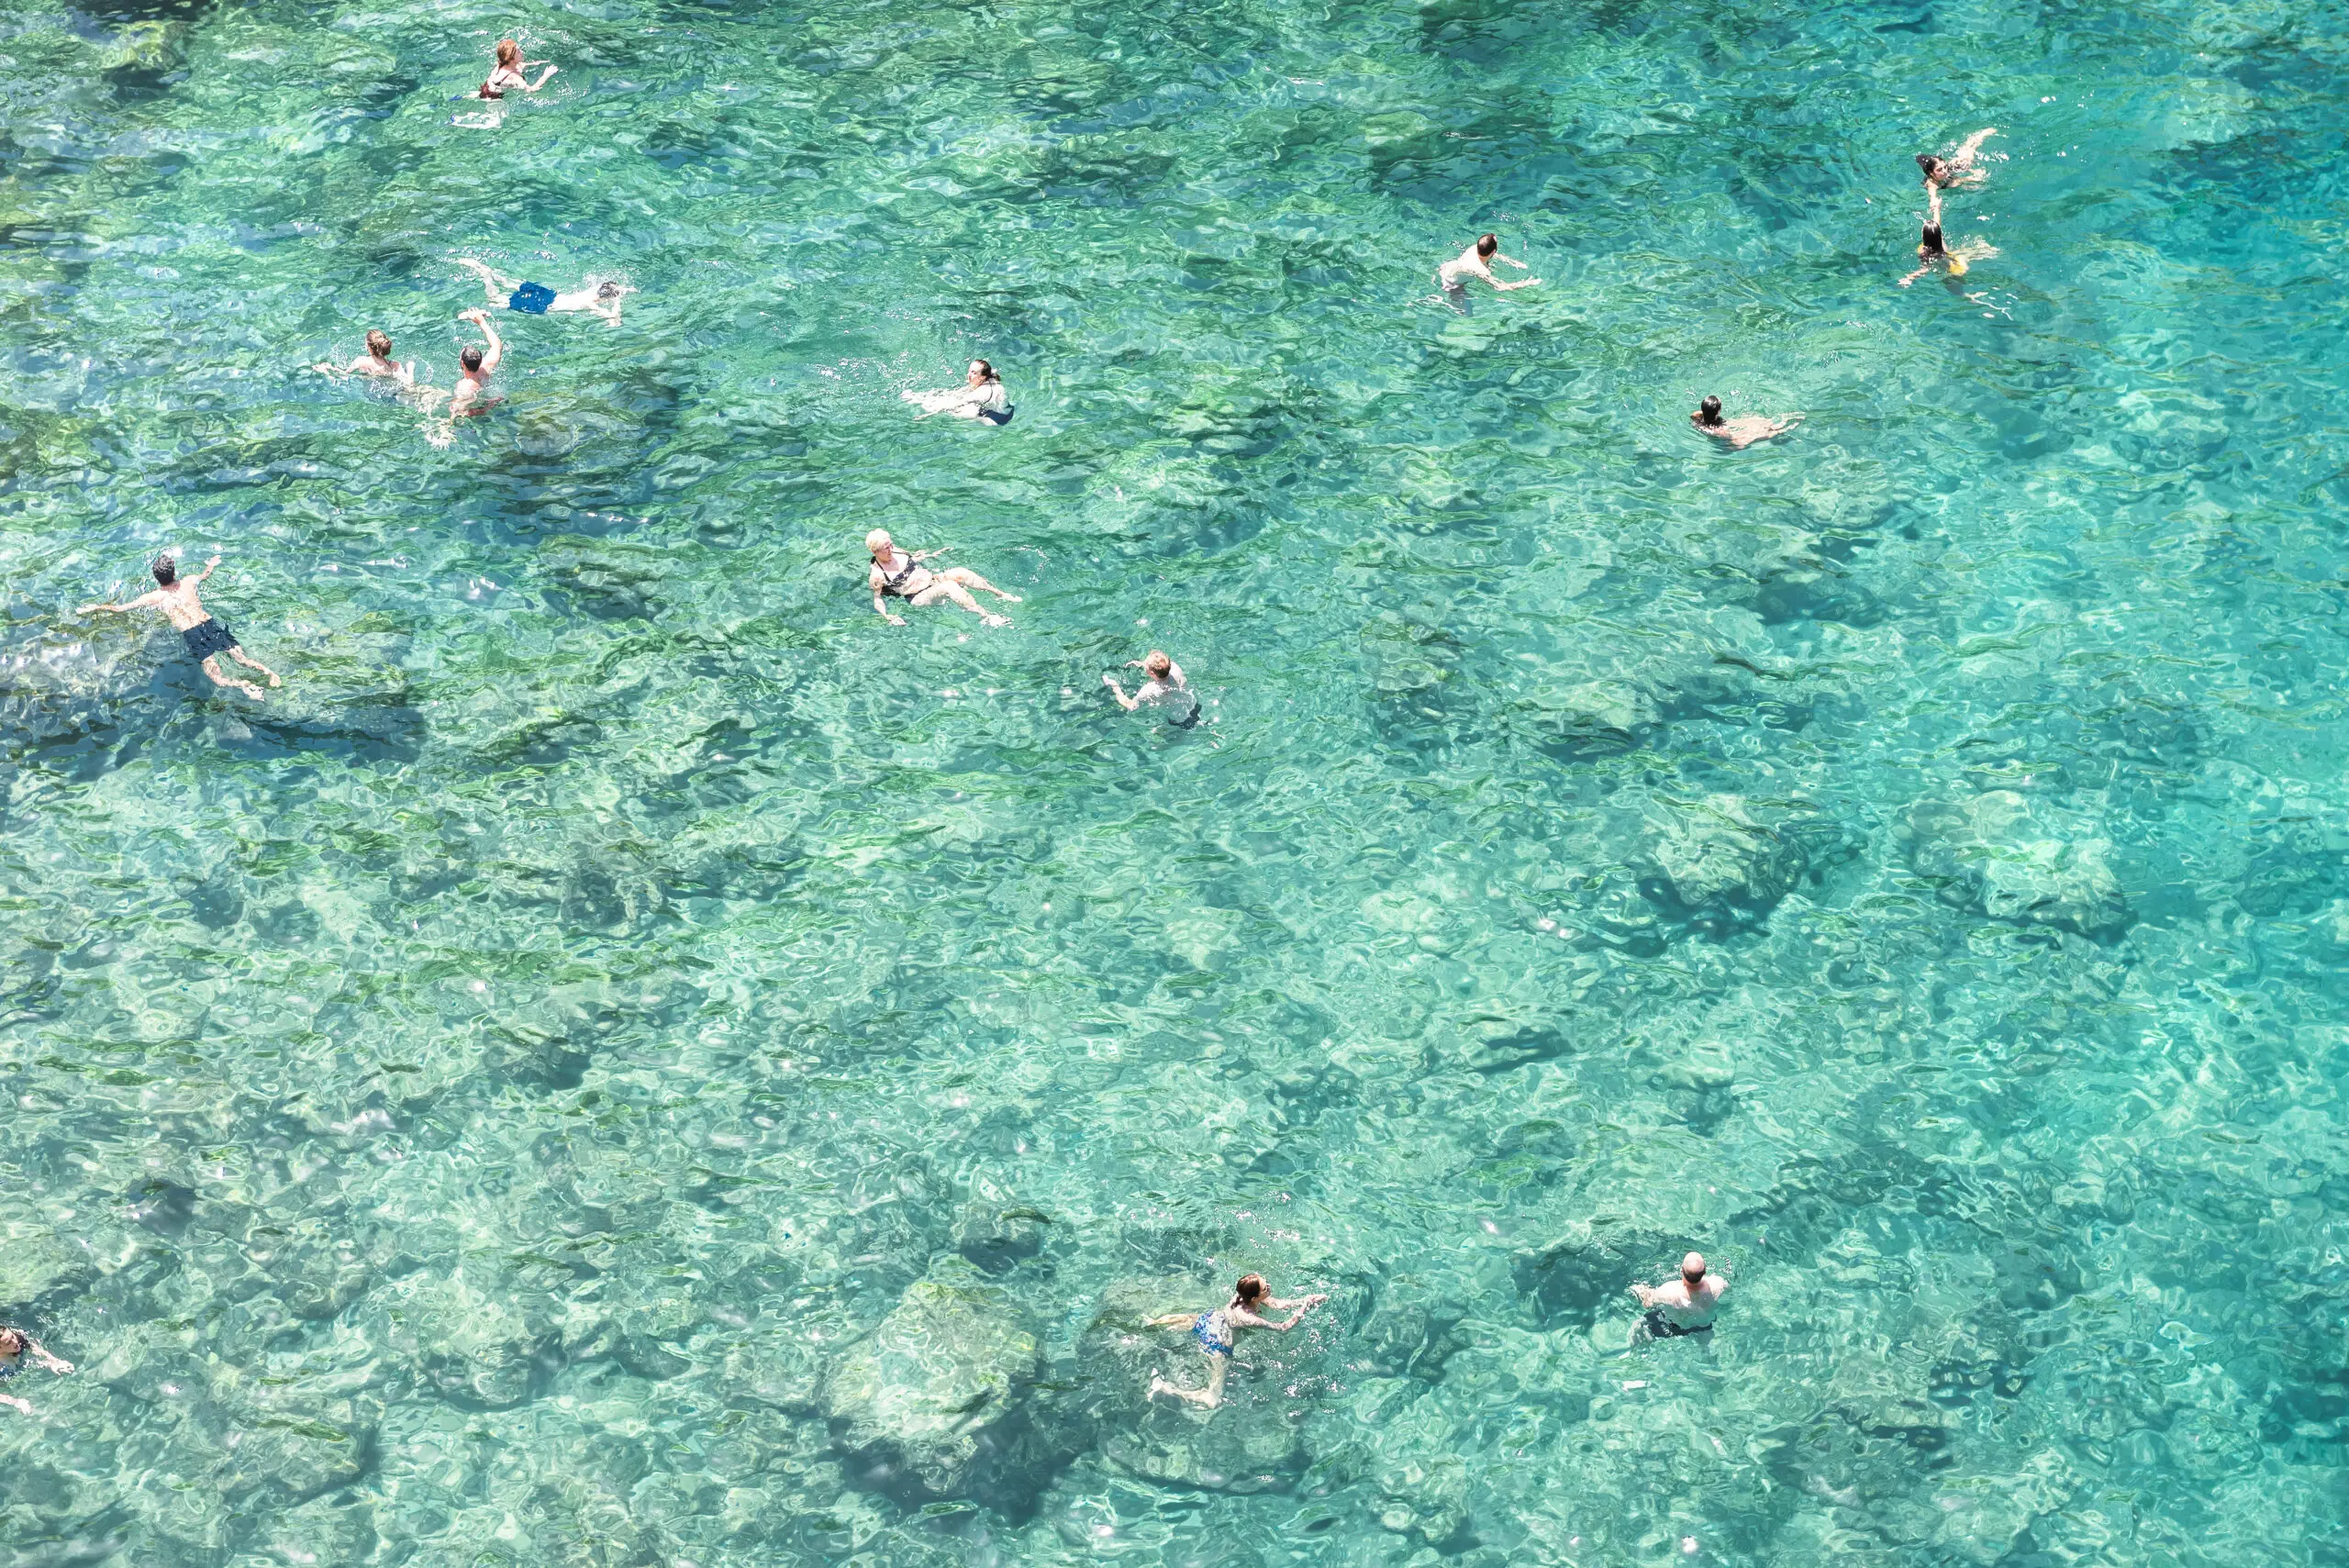 Wandbild (26229) Swimming in the sea by photlovers präsentiert: Menschen,Wasser